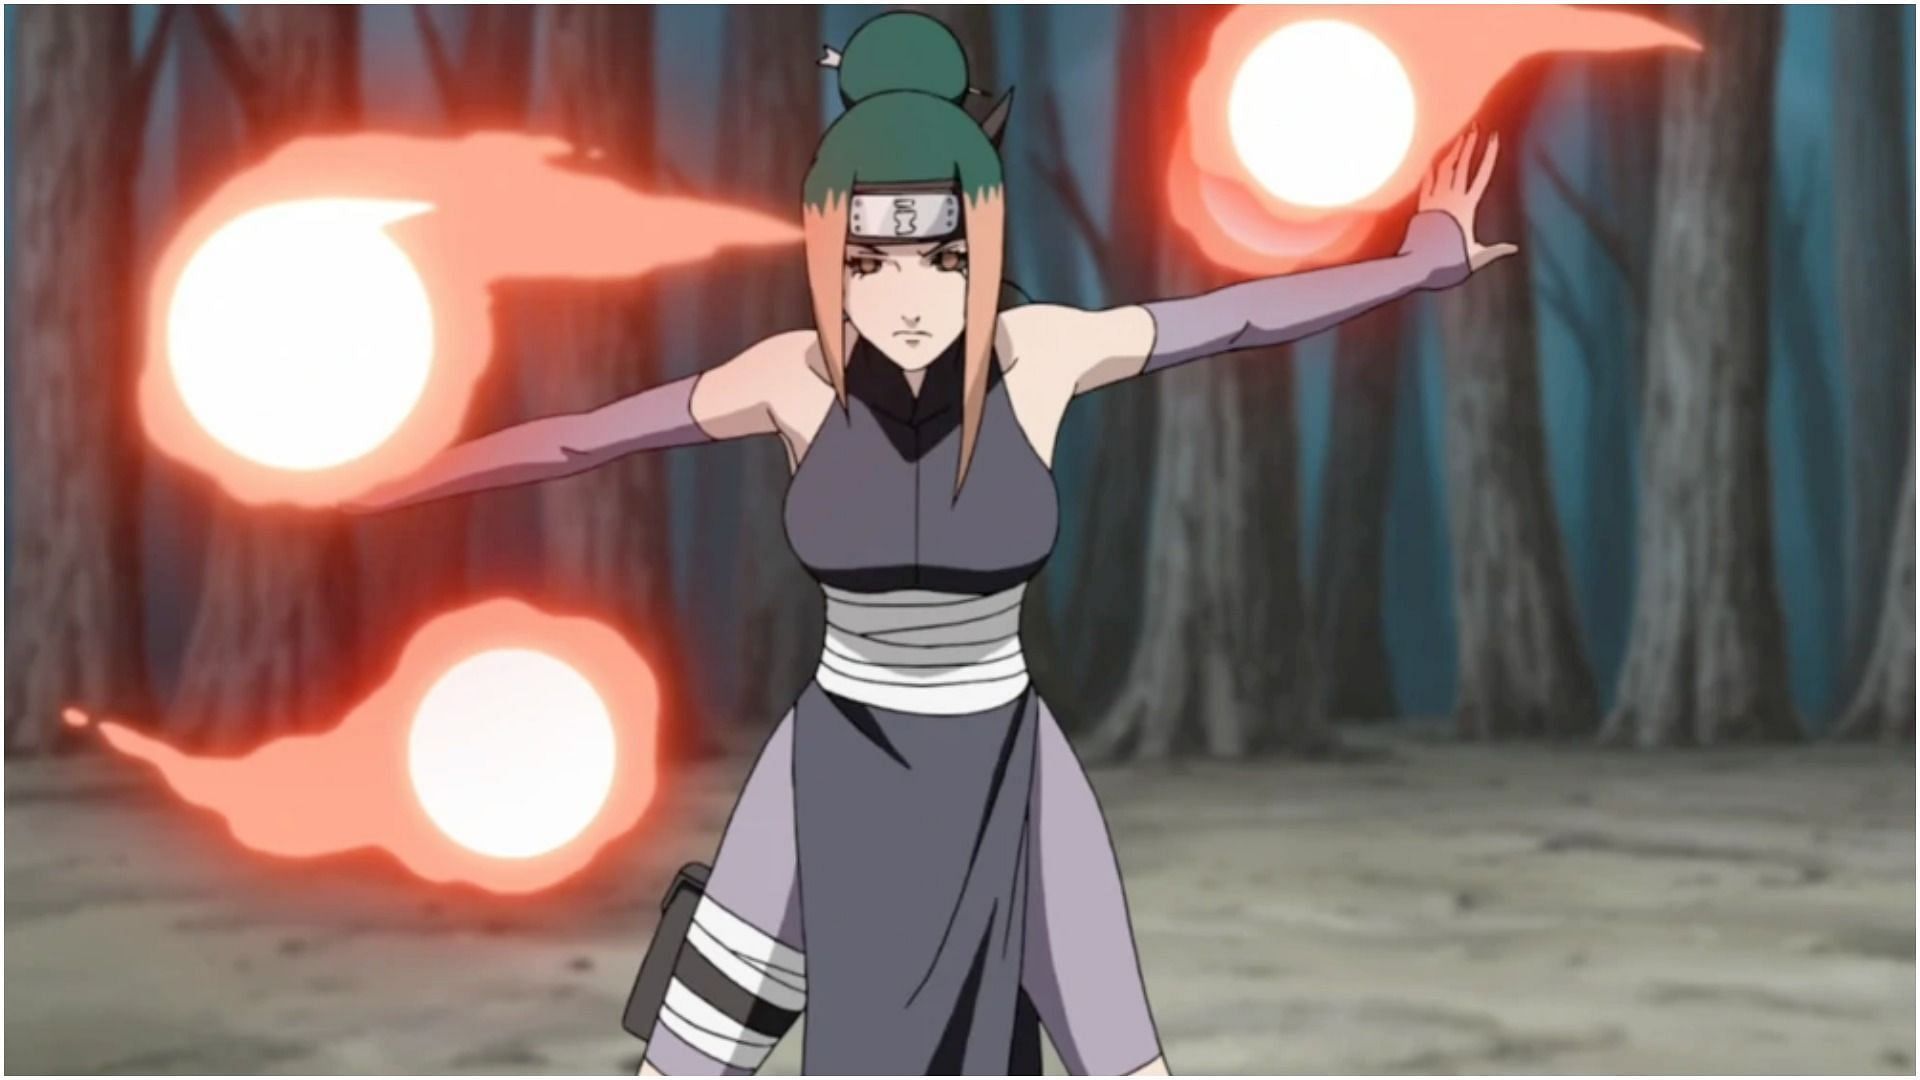 Pakura as seen in the anime Naruto (Image via Studio Pierrot)